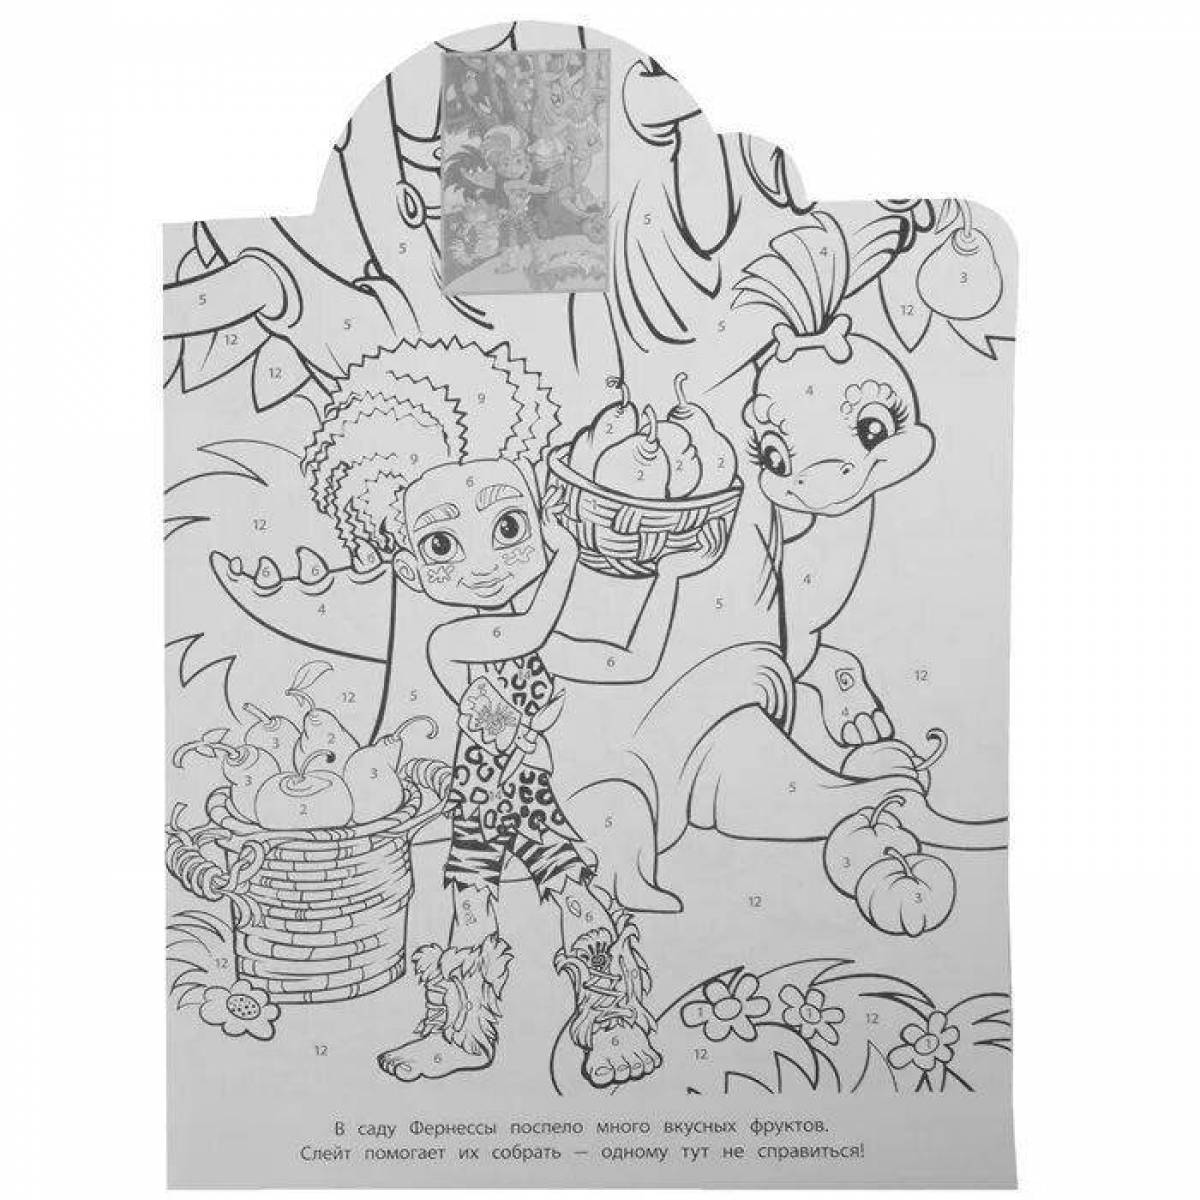 Joyful cave club coloring page